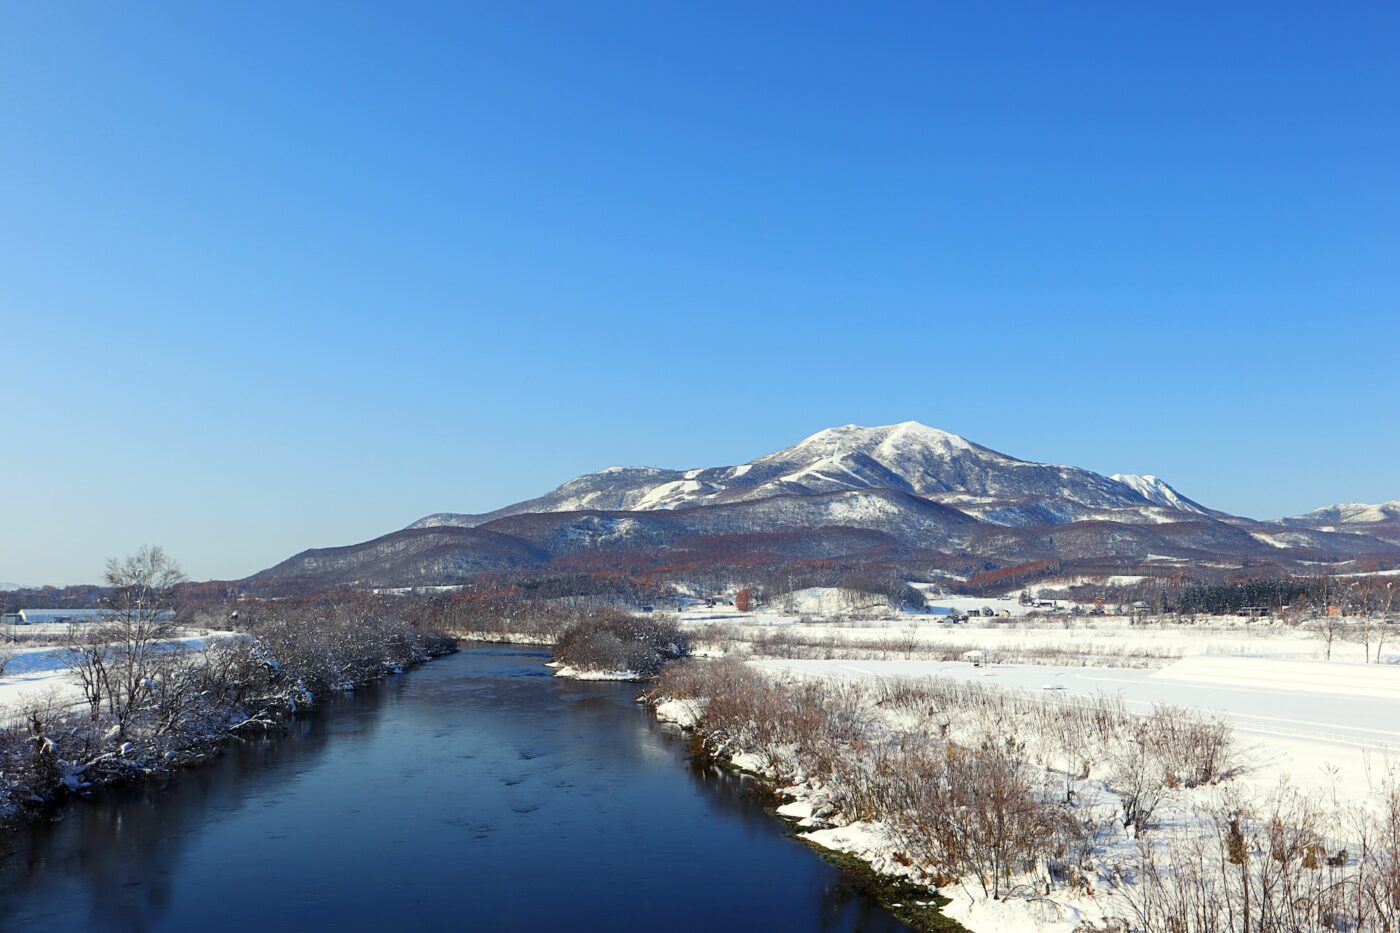 Niseko-Annupuri Mountain